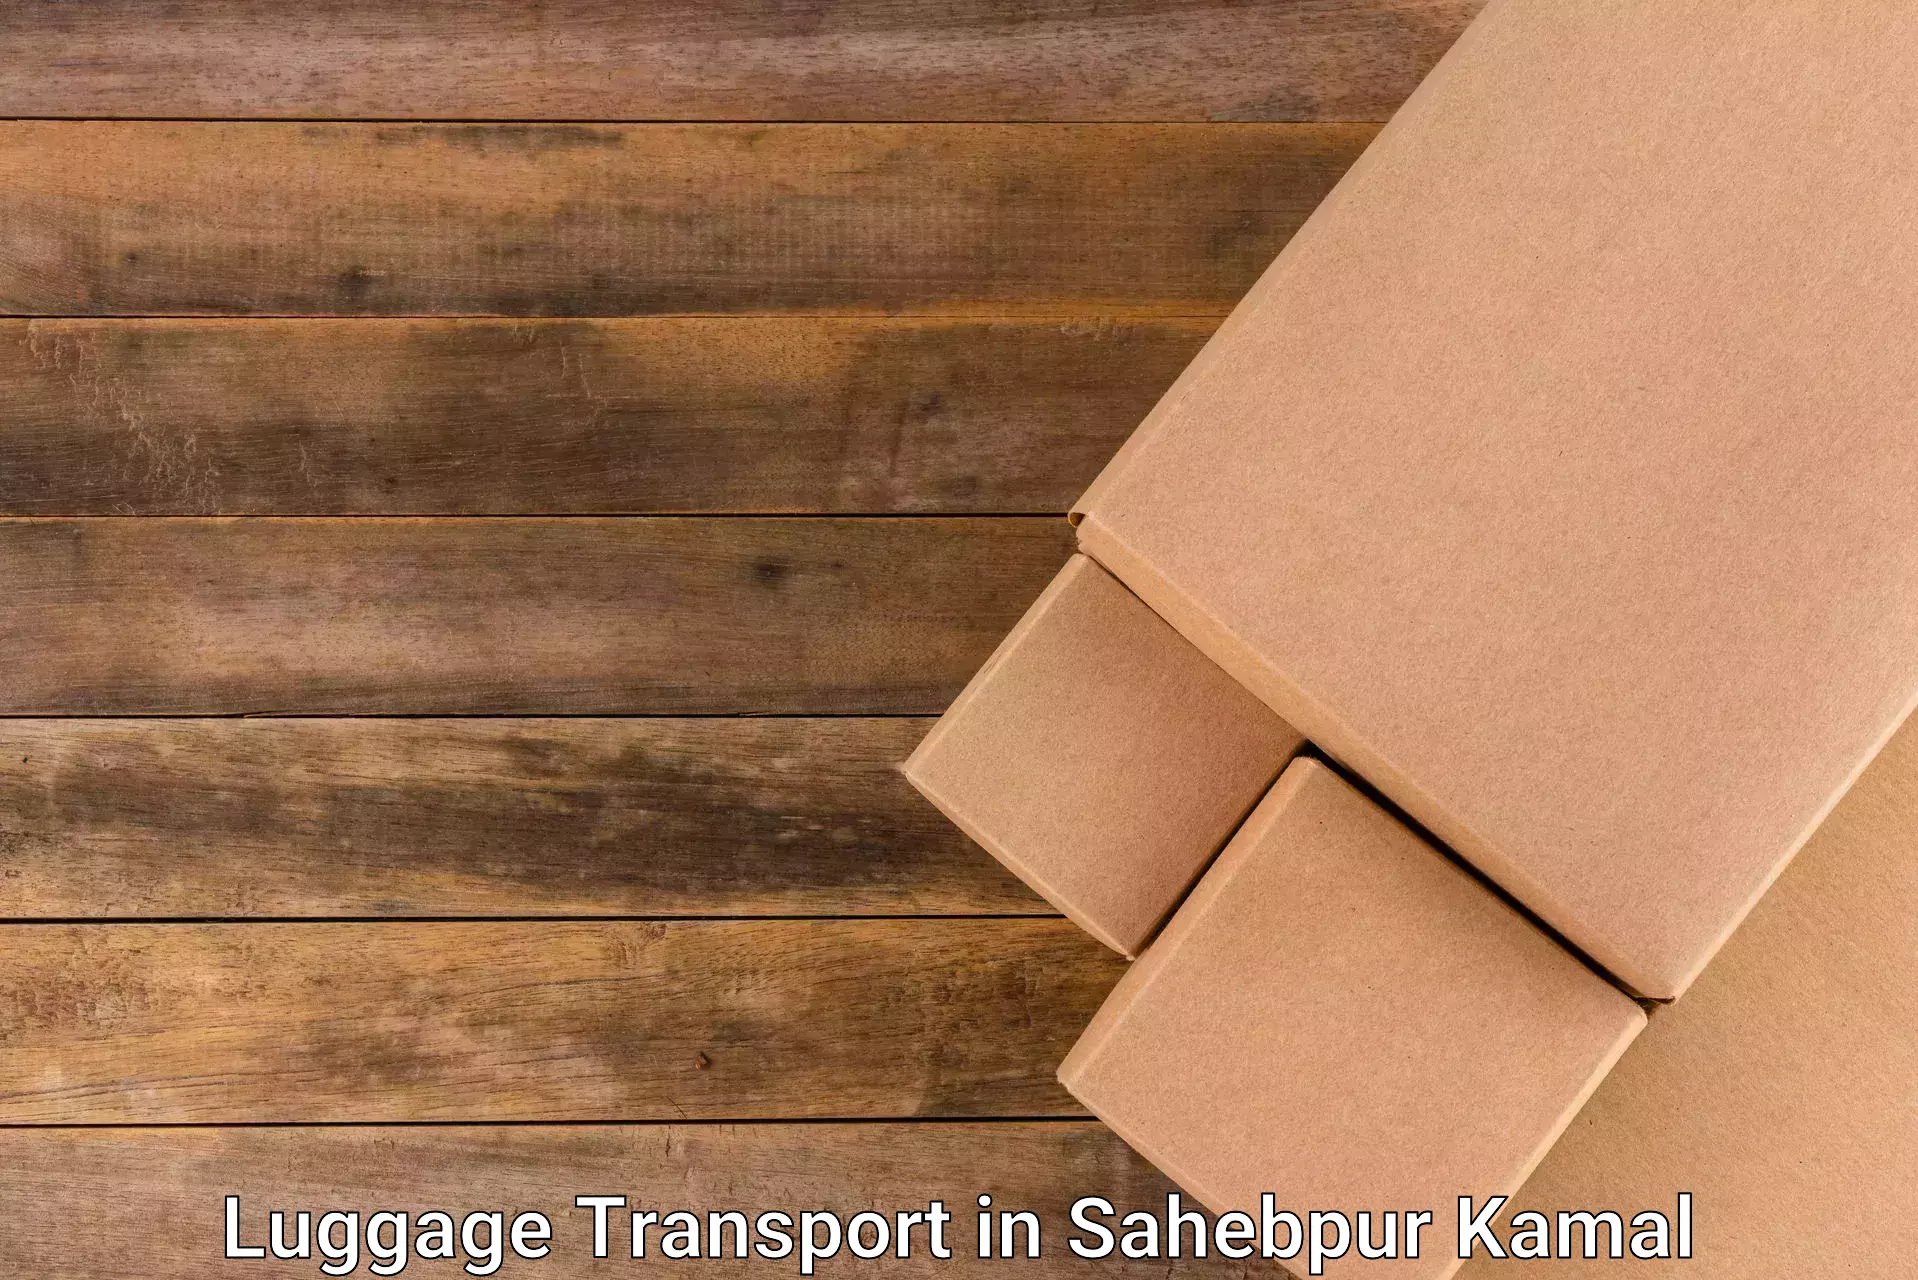 Luggage transport consultancy in Sahebpur Kamal